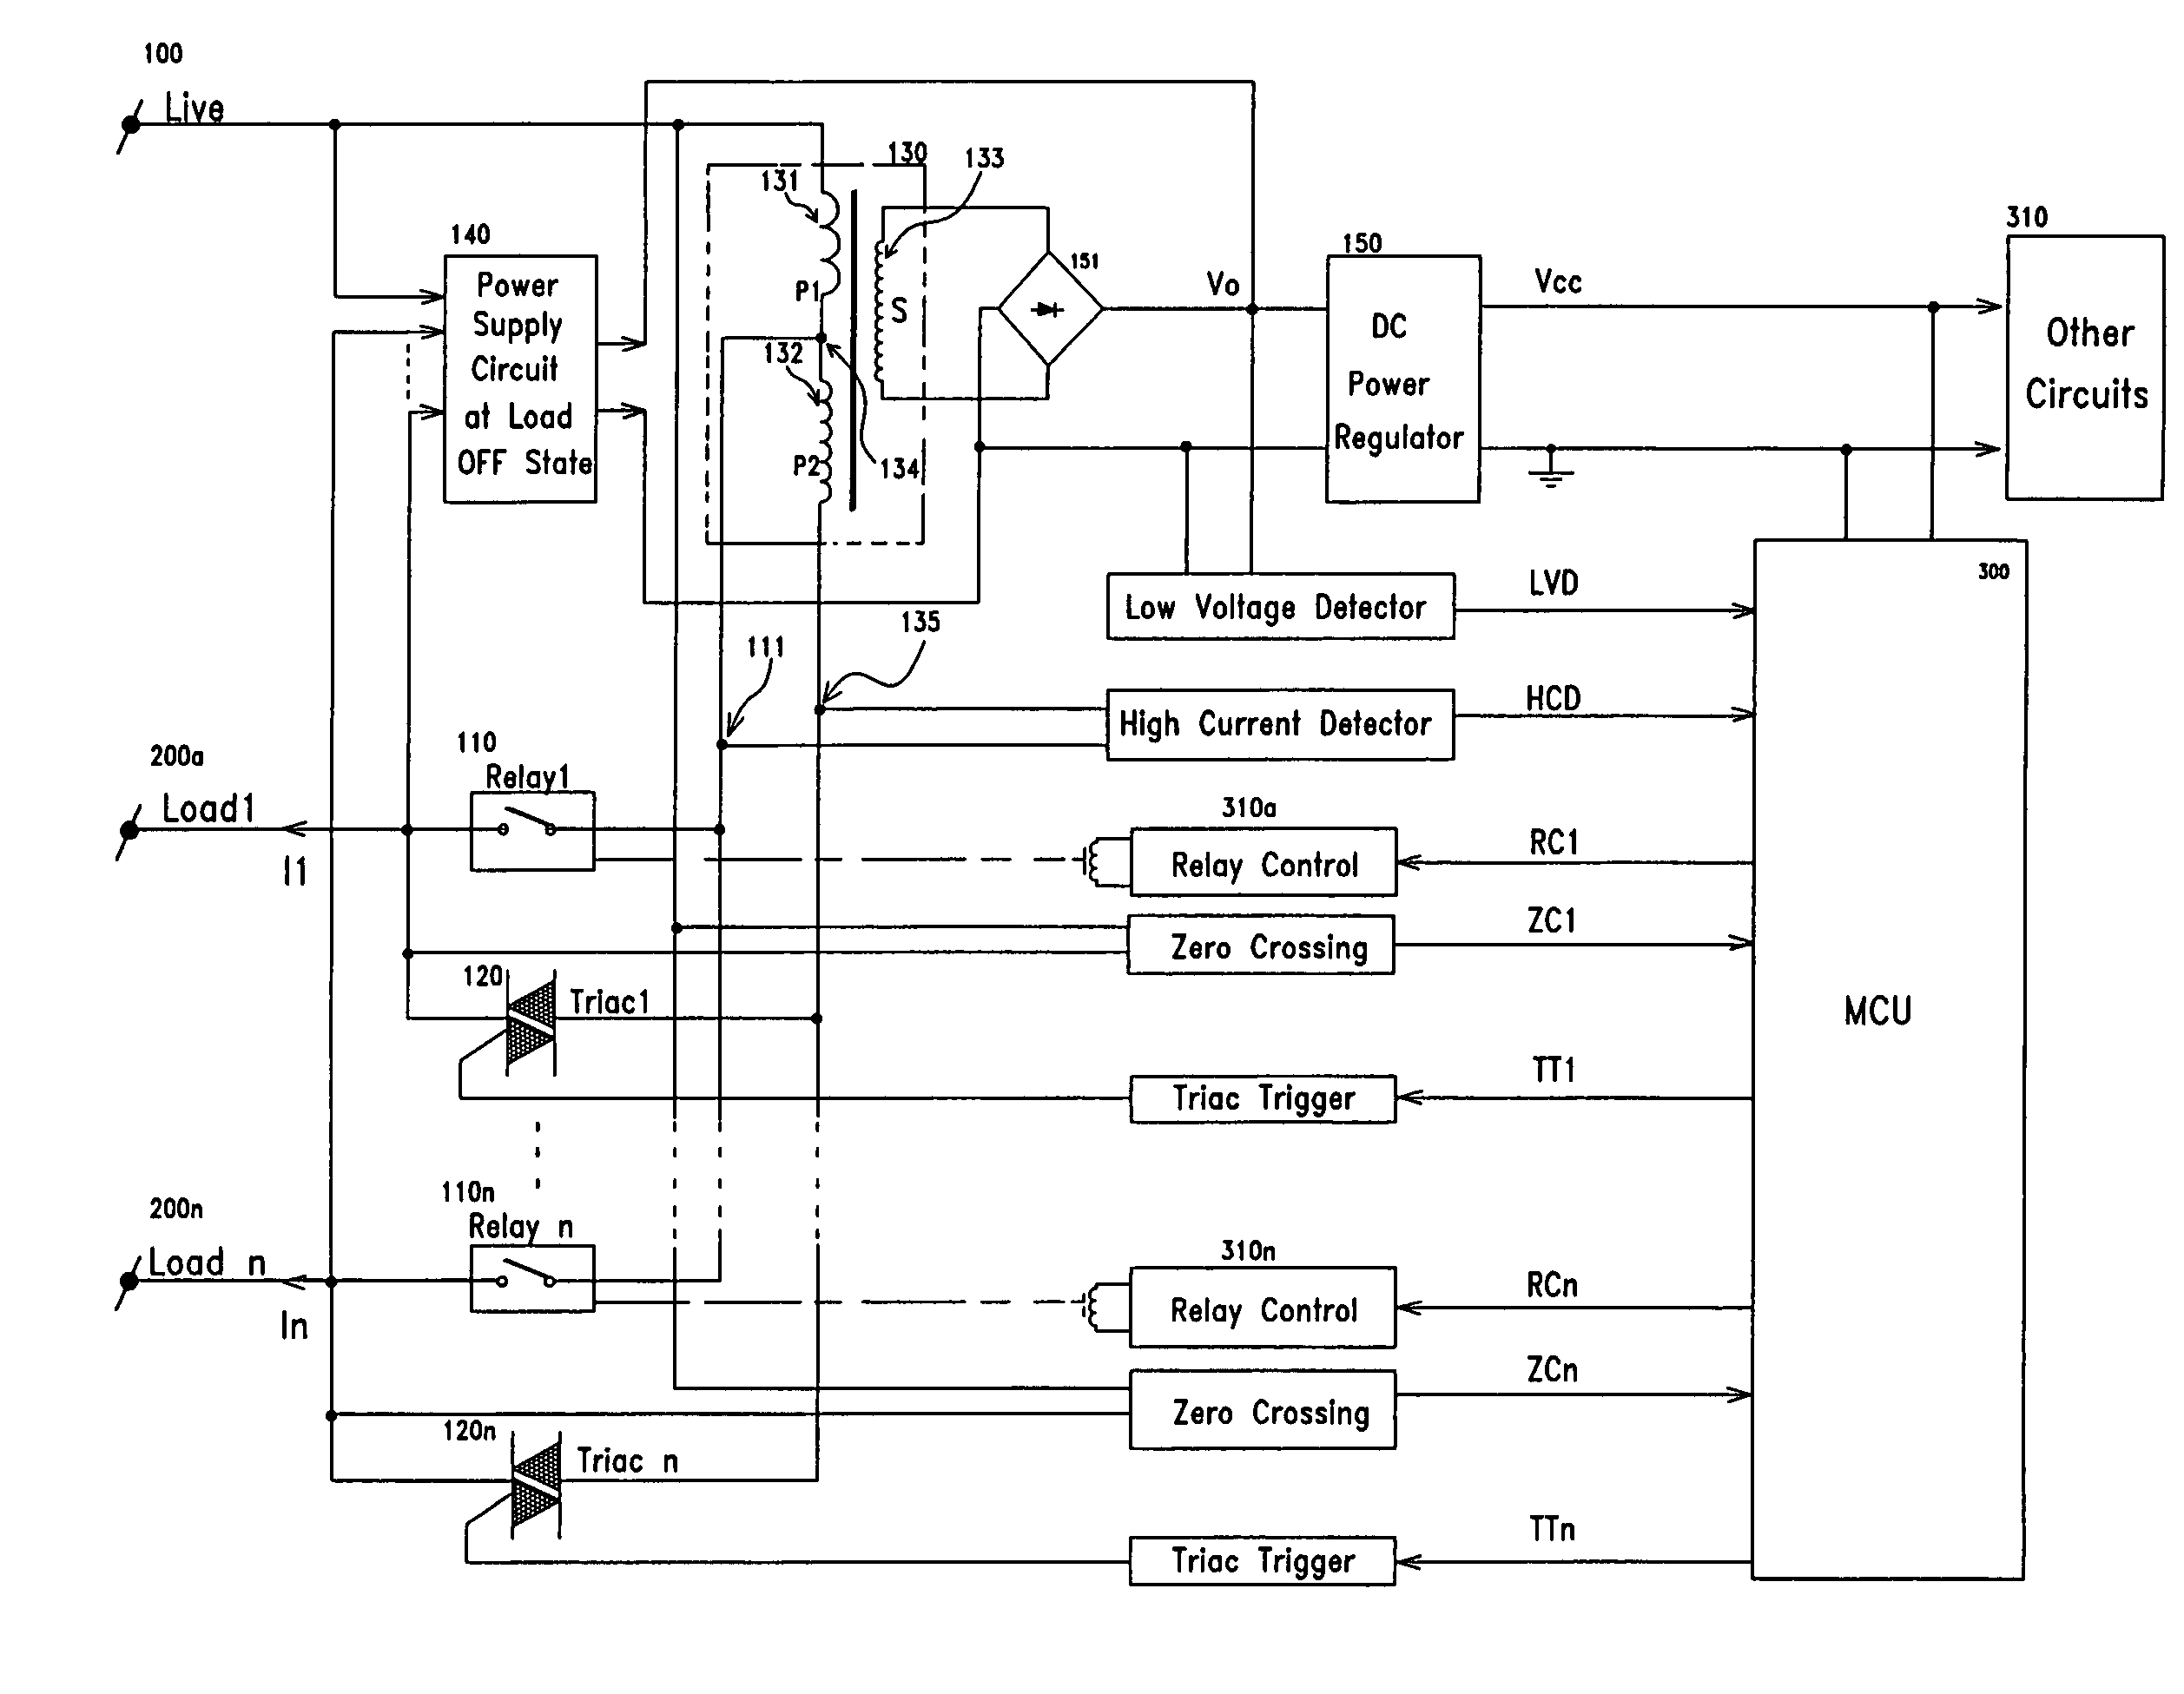 Power switching apparatus